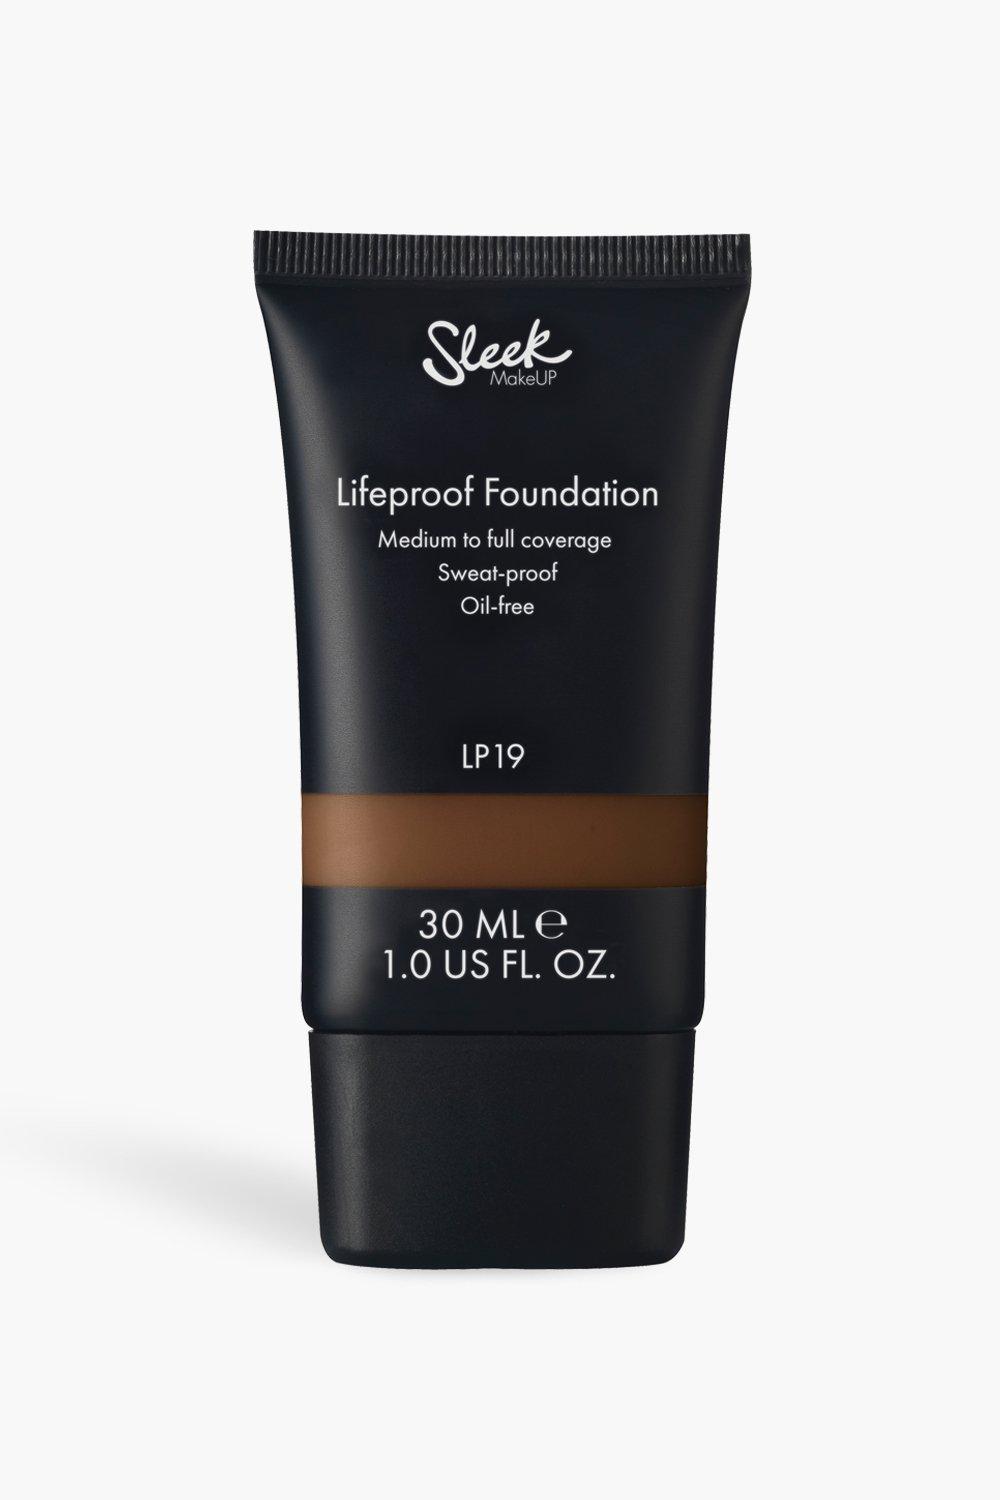 Sleek Lifeproof Foundation